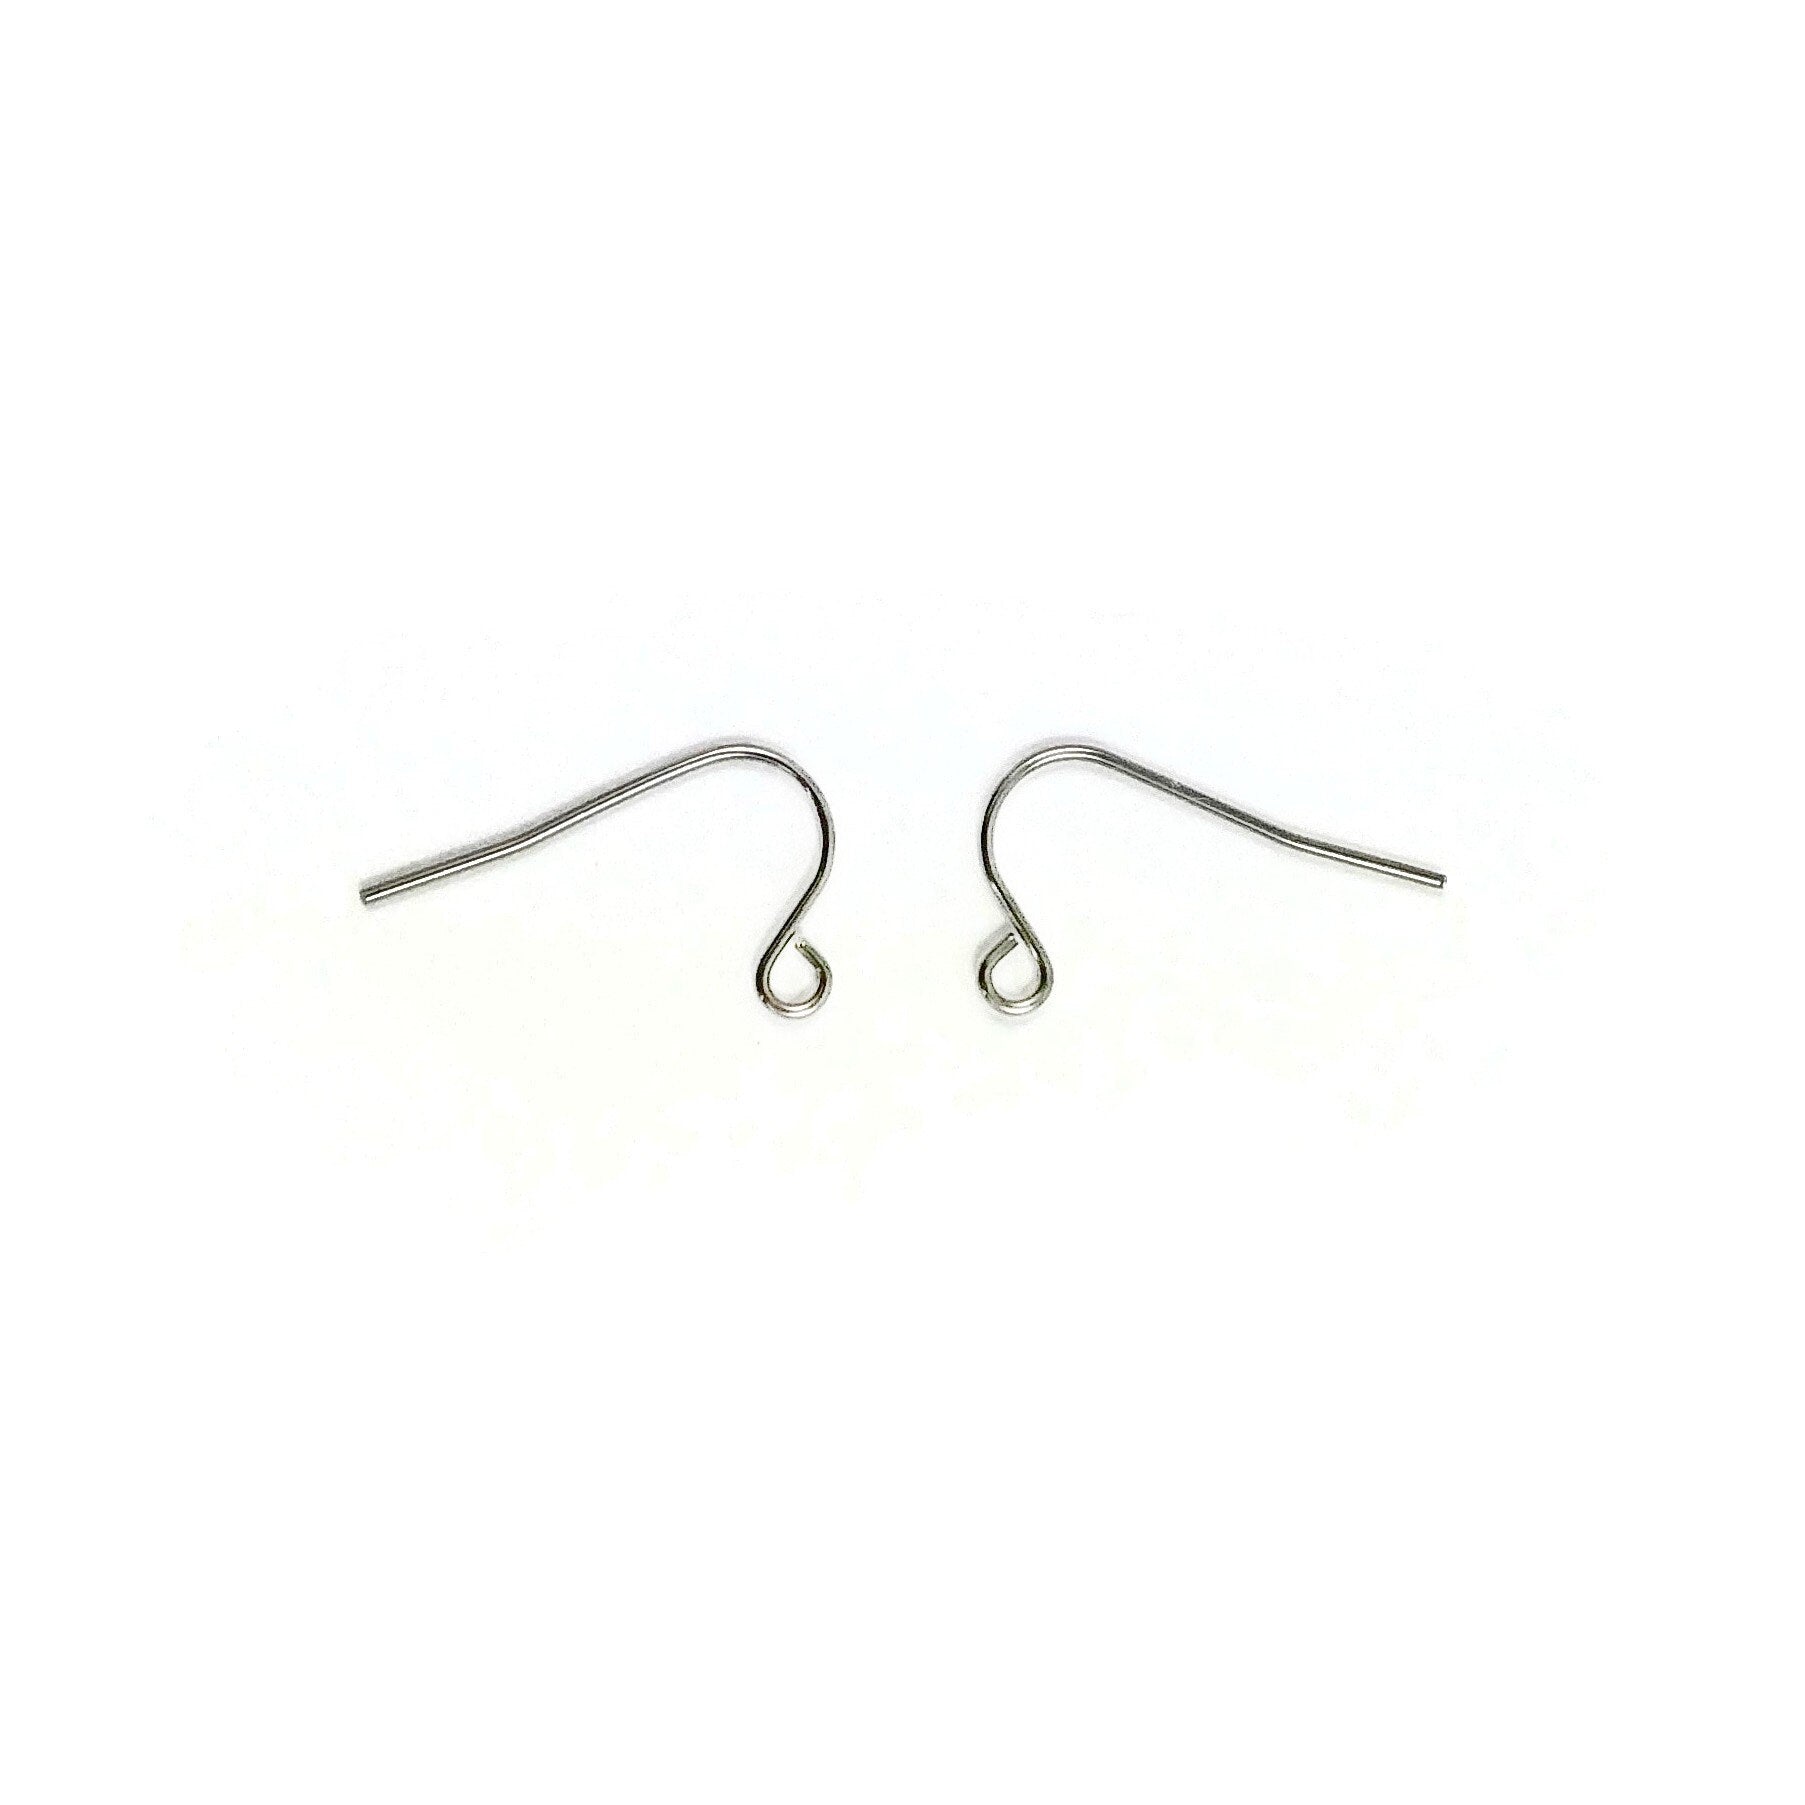 Surgical stainless steel hooks, 21 gauge earring findings, Hypoallergenic silver earwire, Jewelry making